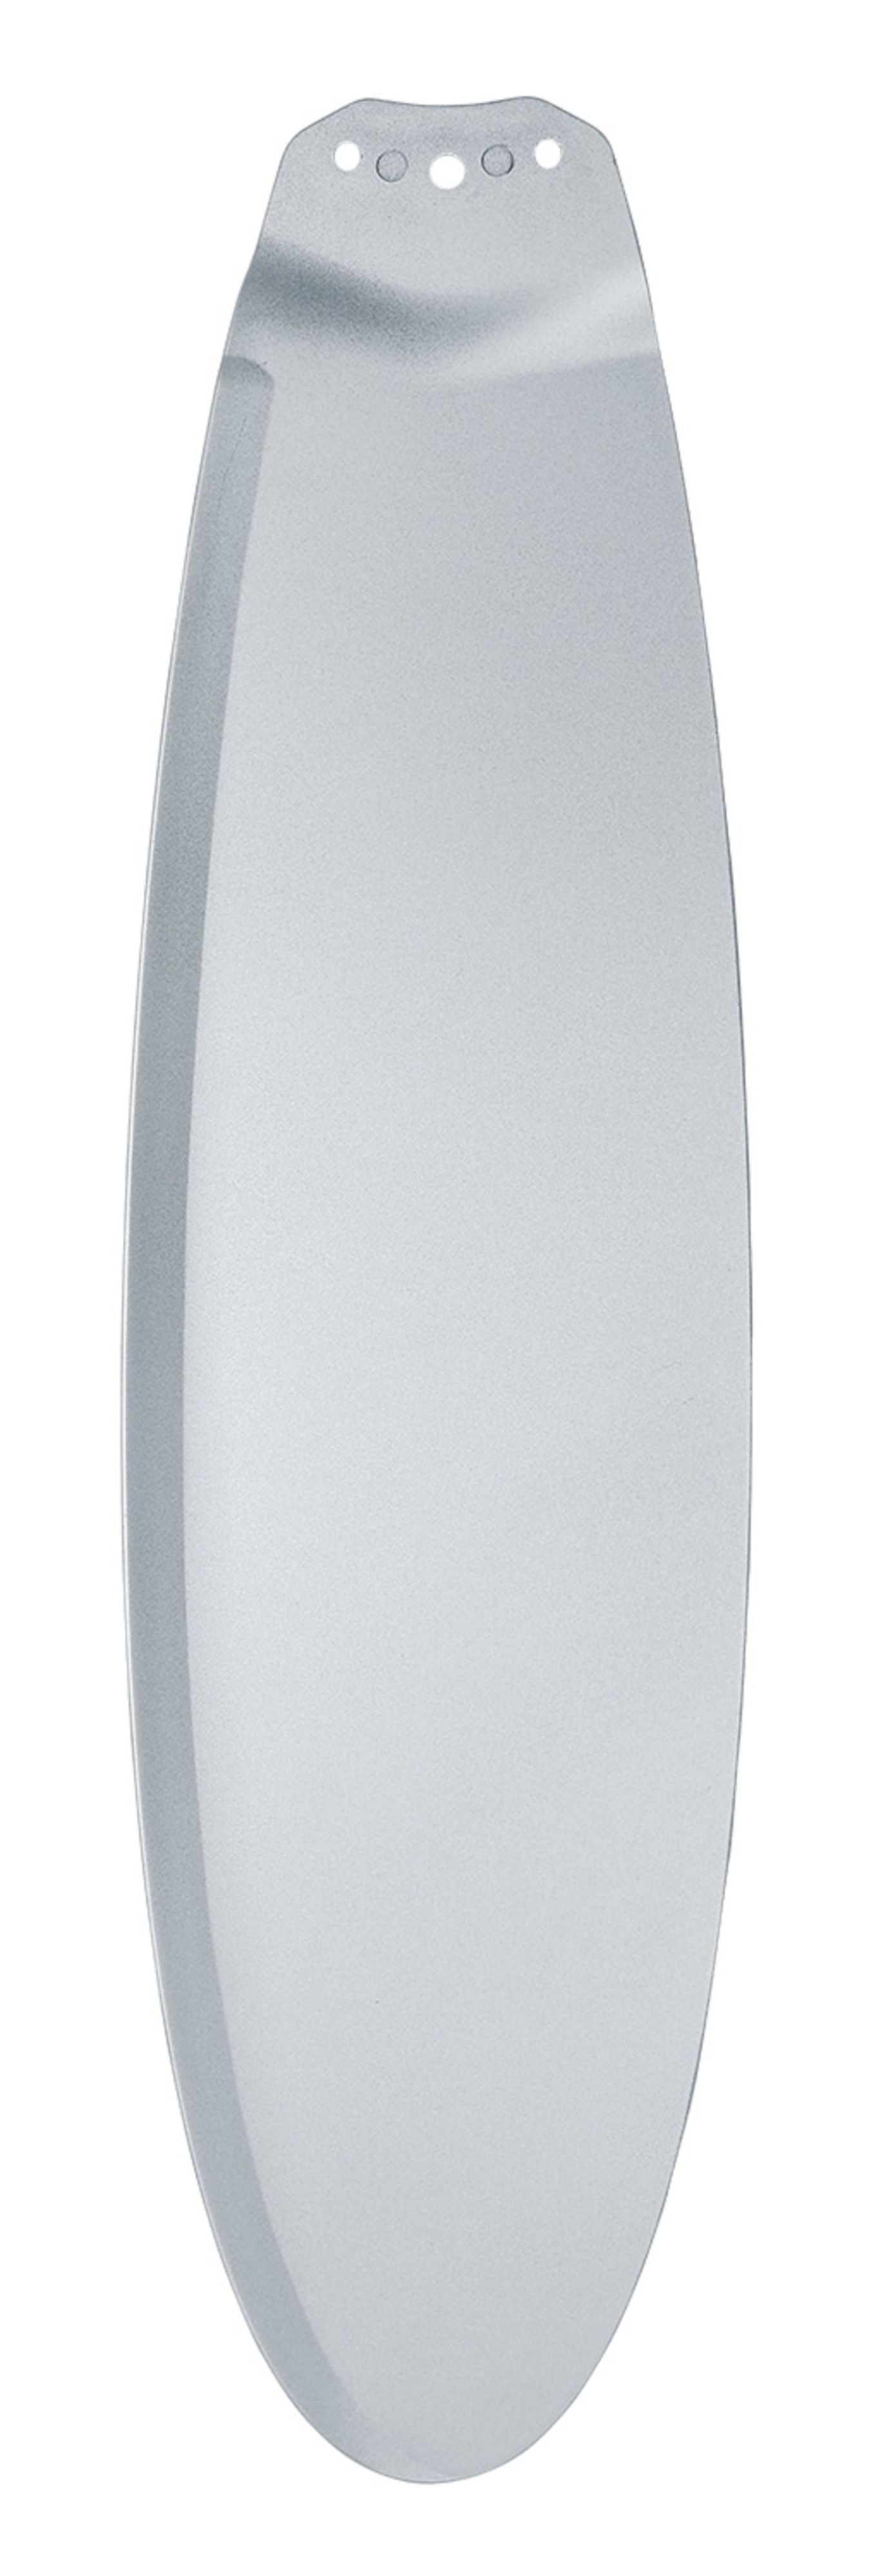 CASAFAN Eco Plano Grau Watt) / Silber II LED (28 Deckenventilator